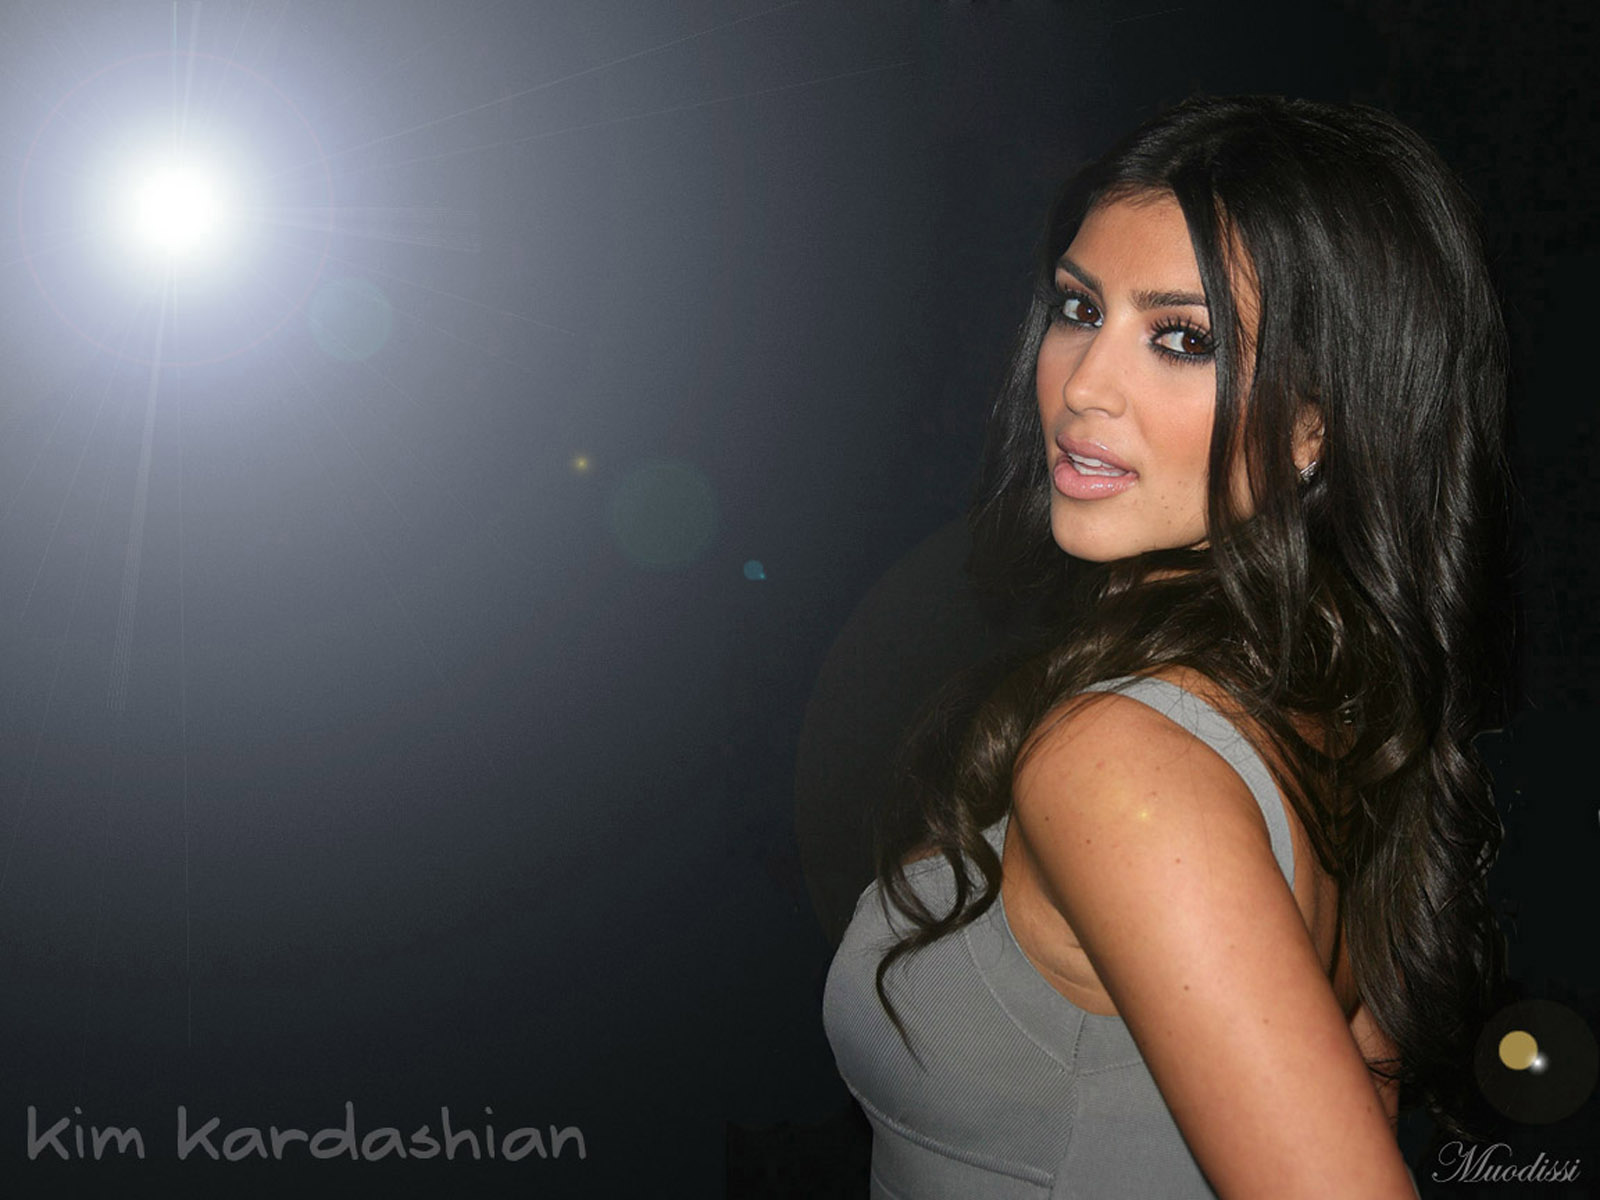 Kim Kardashian hot photos